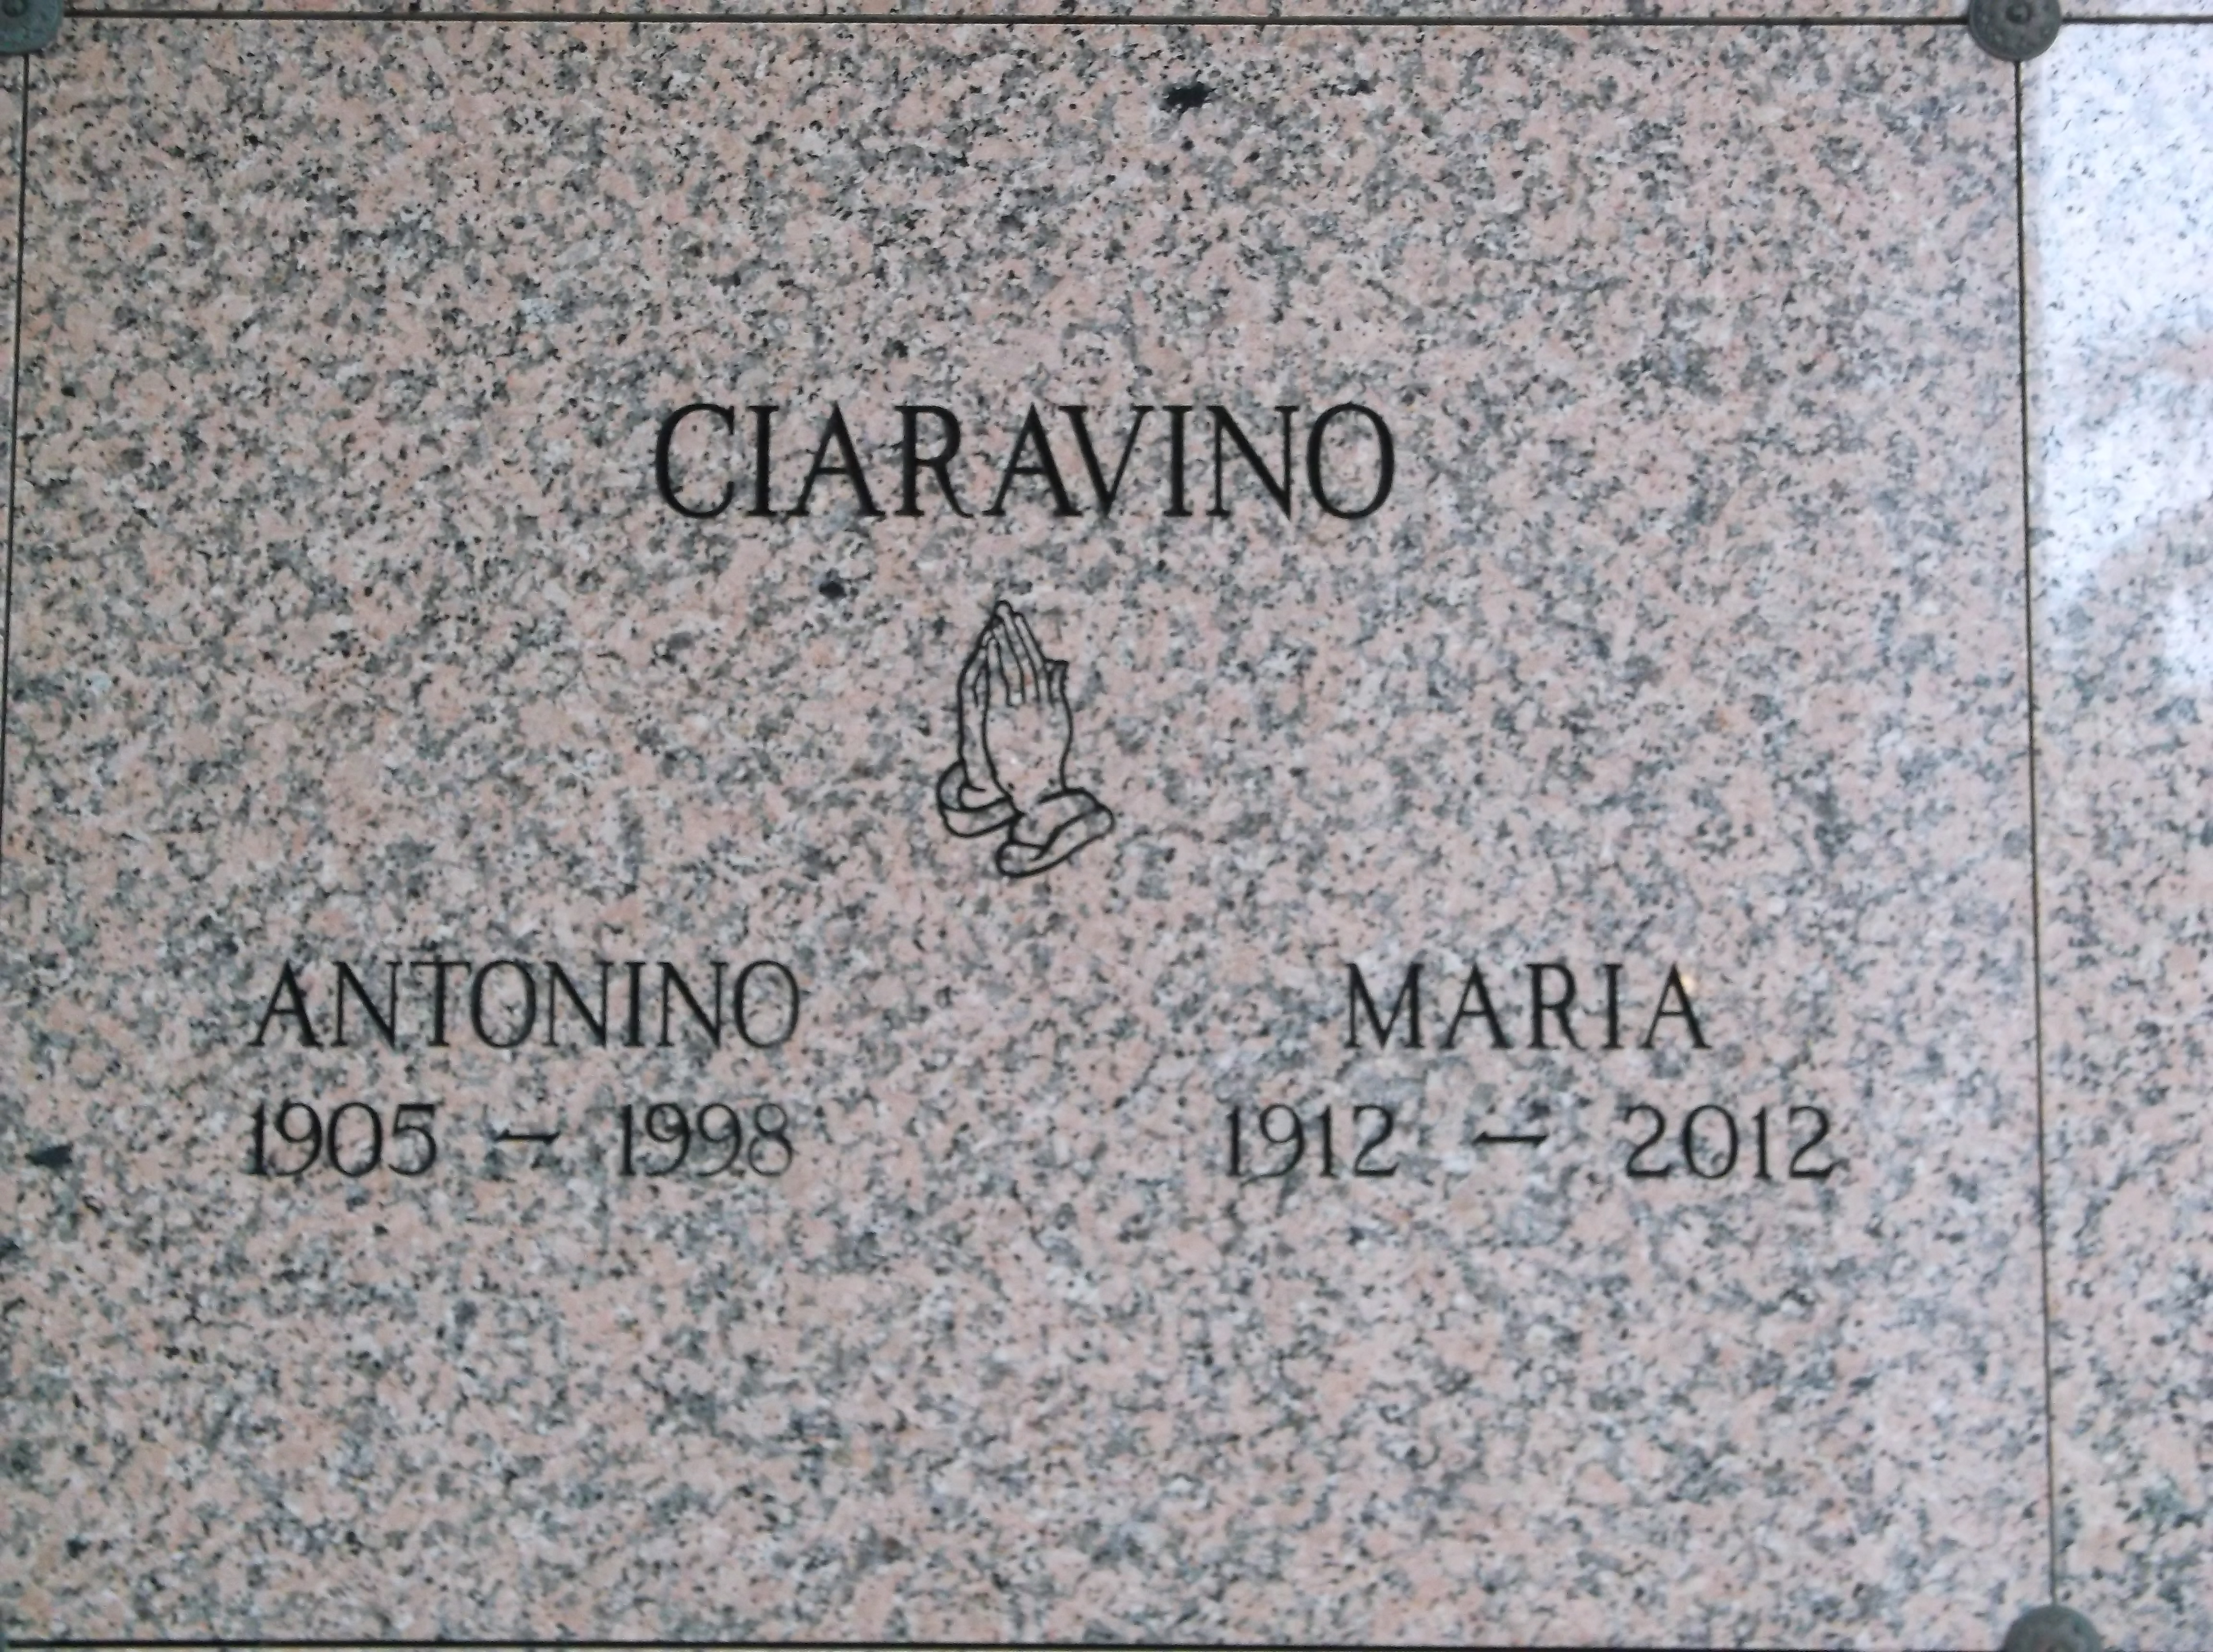 Antonino Ciaravino